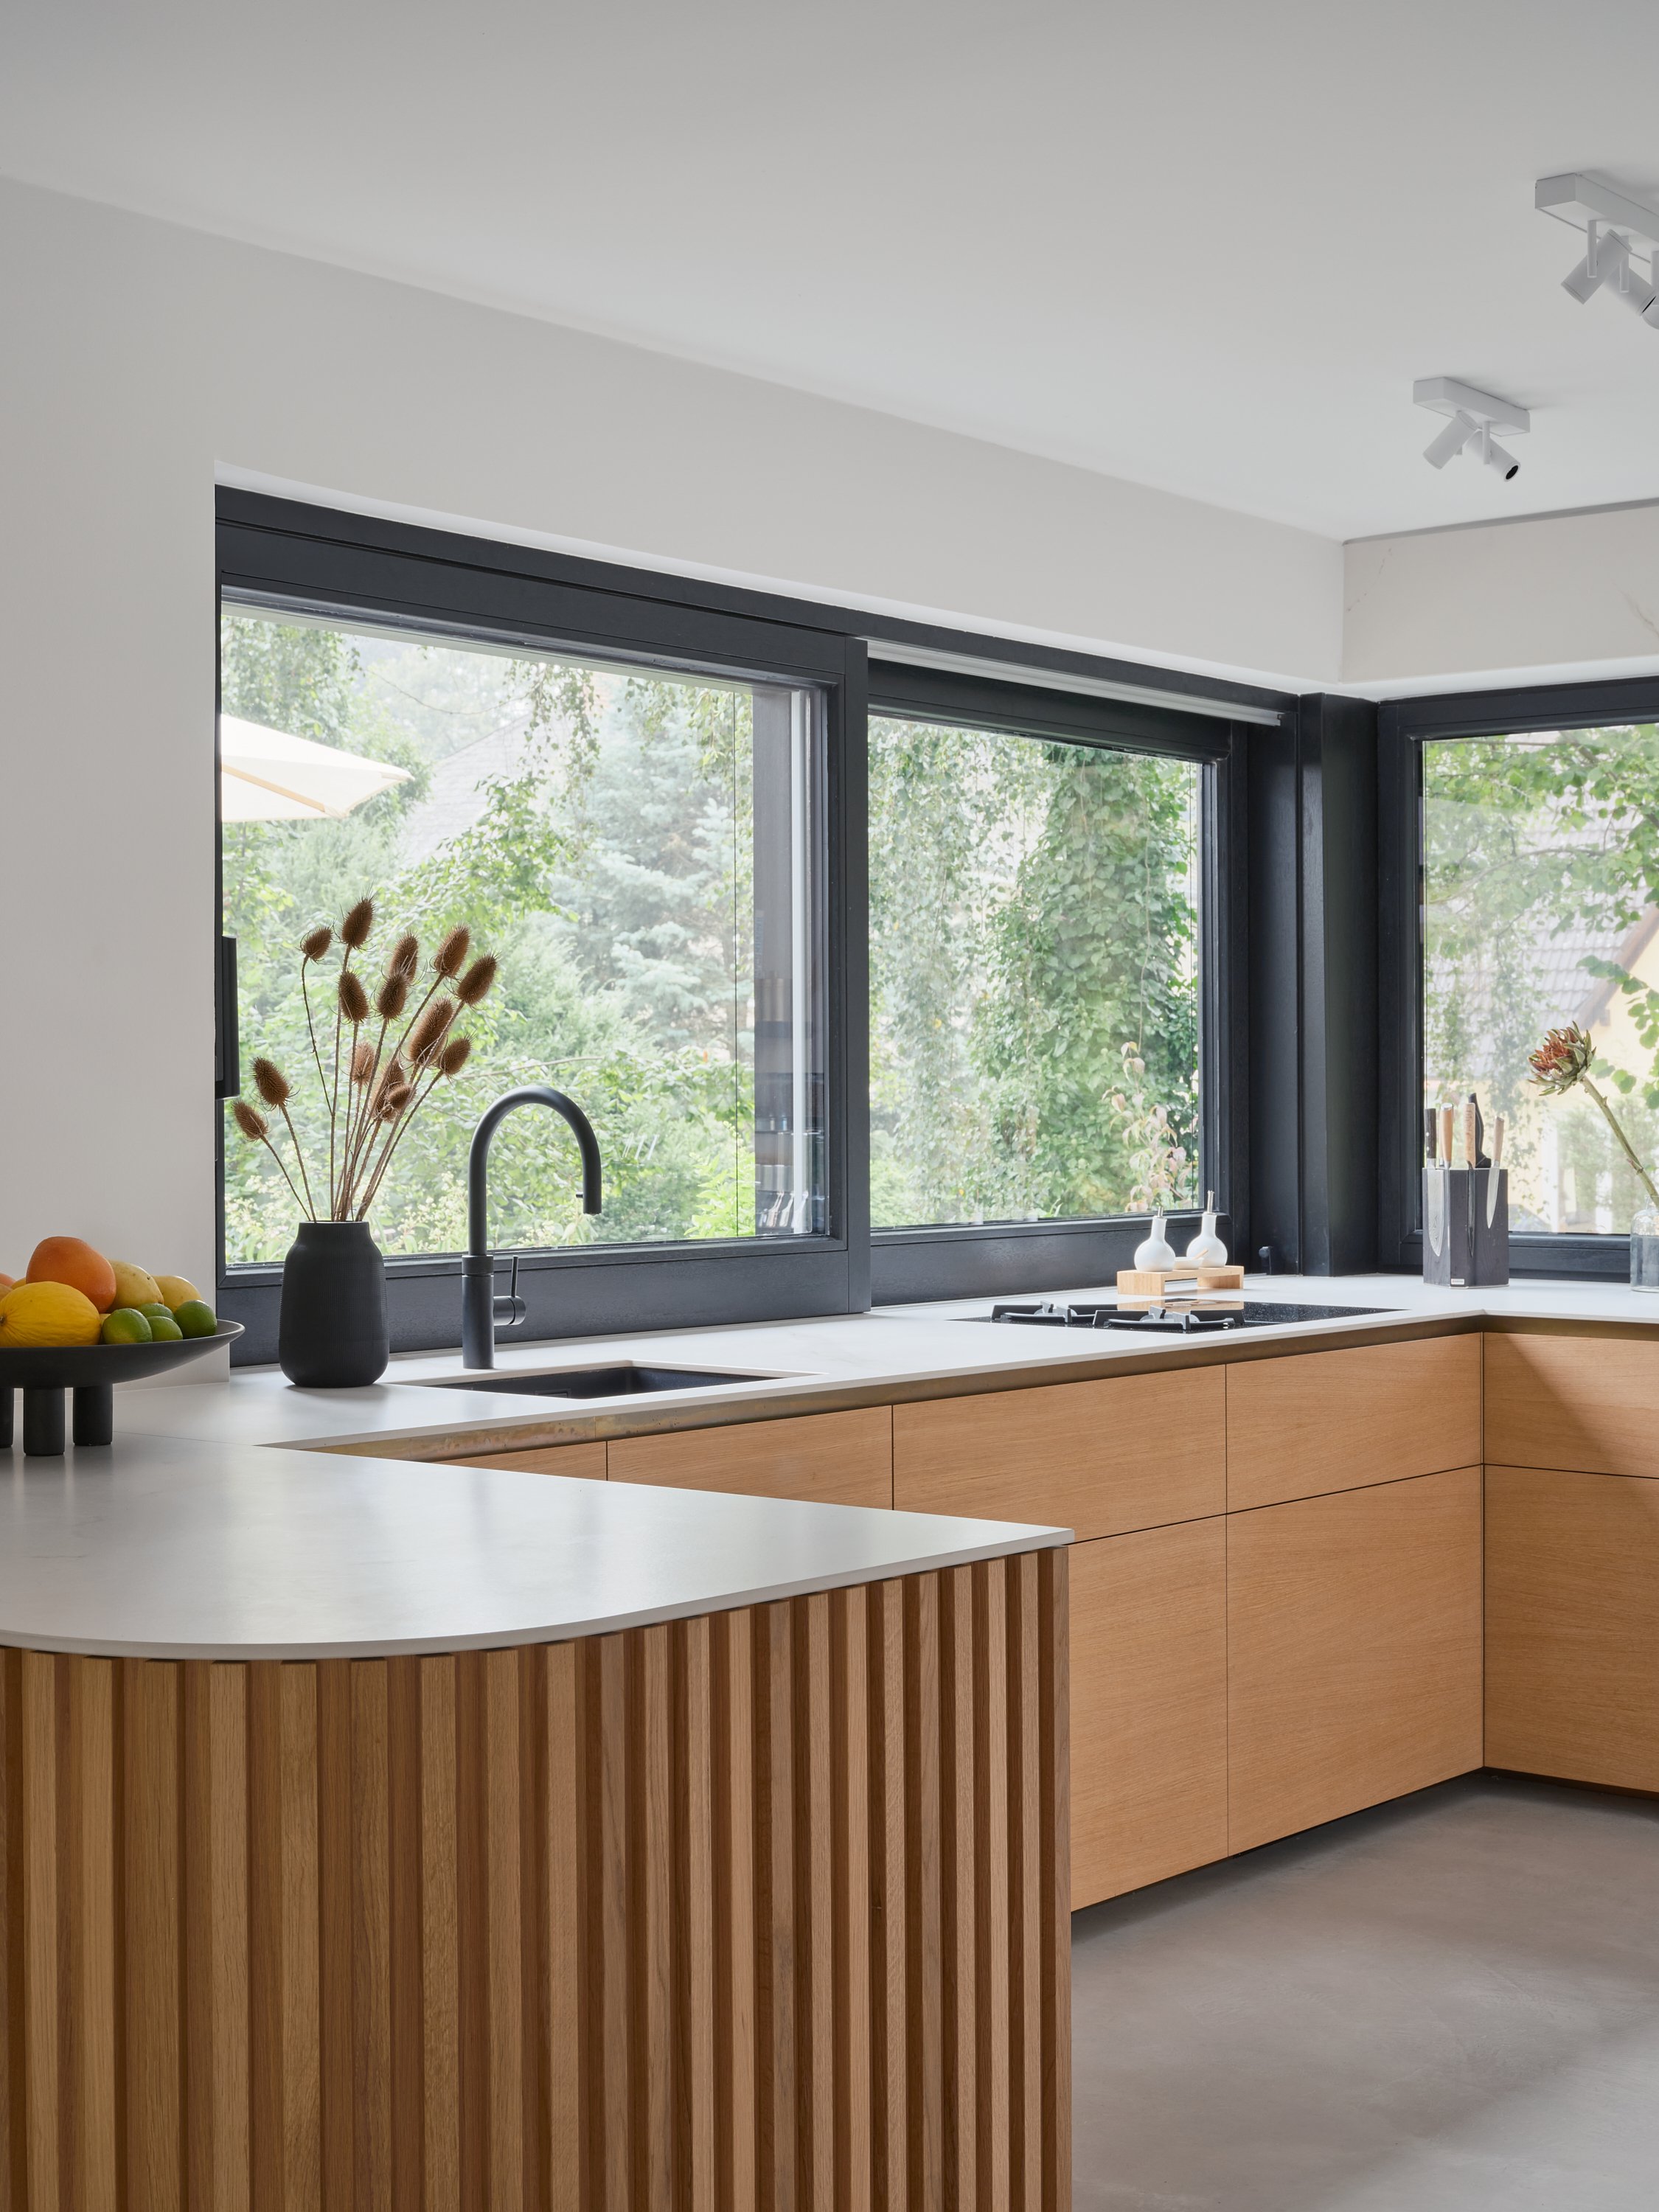 raini-peters-interior-design-styling-kitchen.jpg